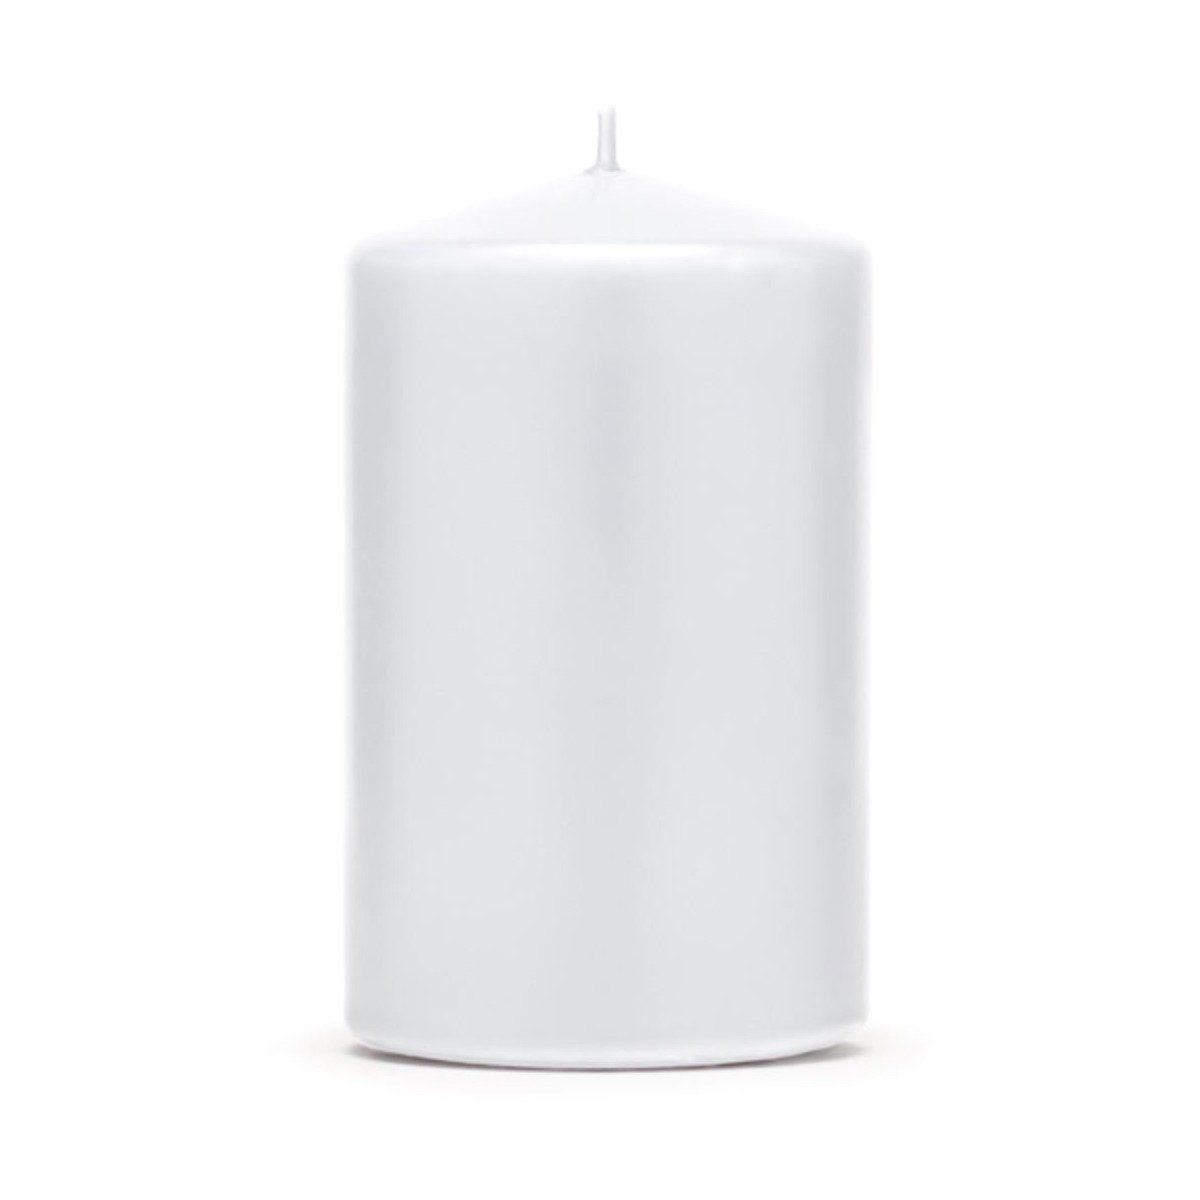 Bougie pilier blanche - 10 x 6,5 cm